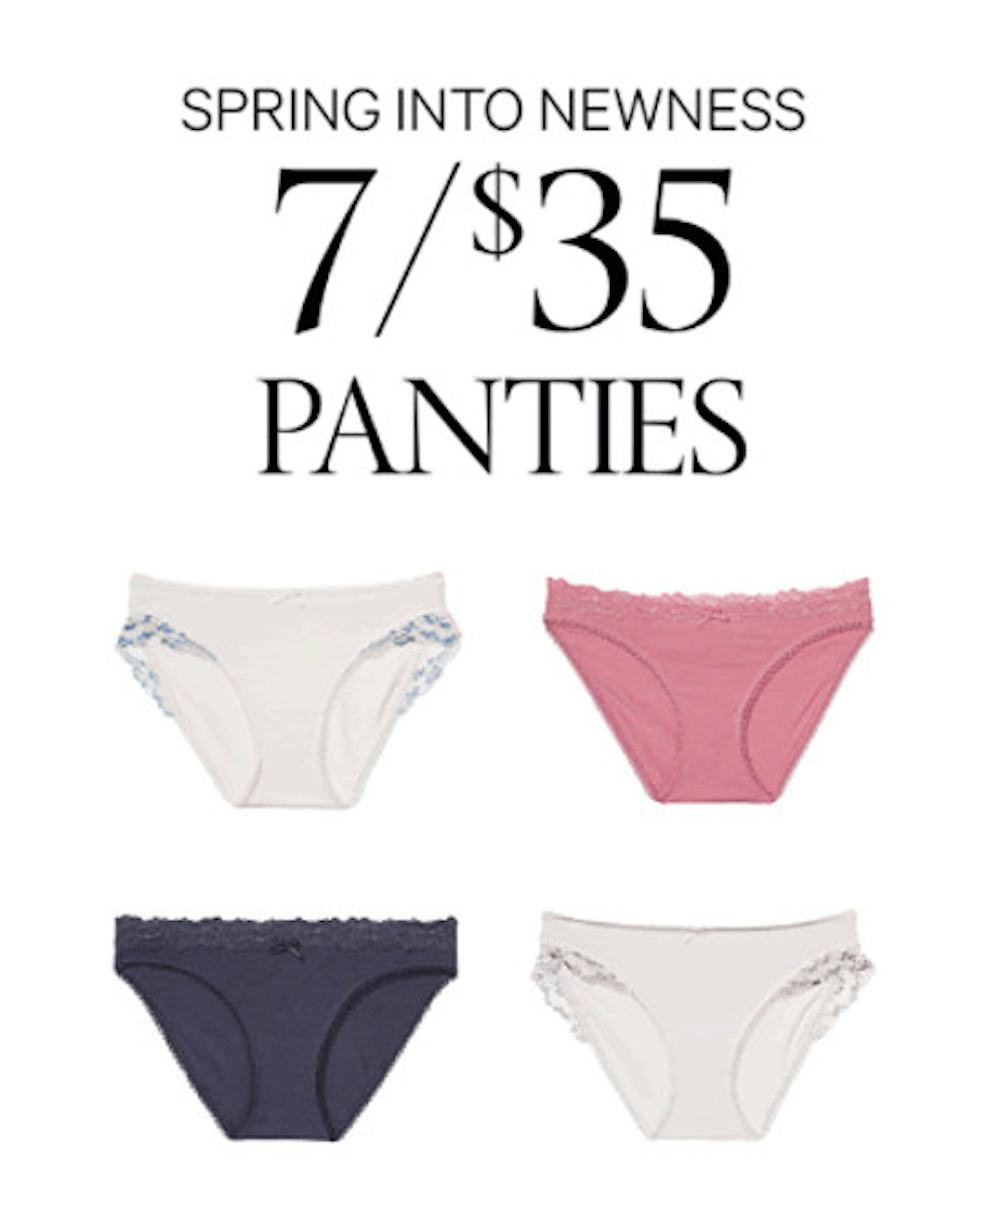 Victoria's Secret: 7/$35 Panties Are Here All Weekend